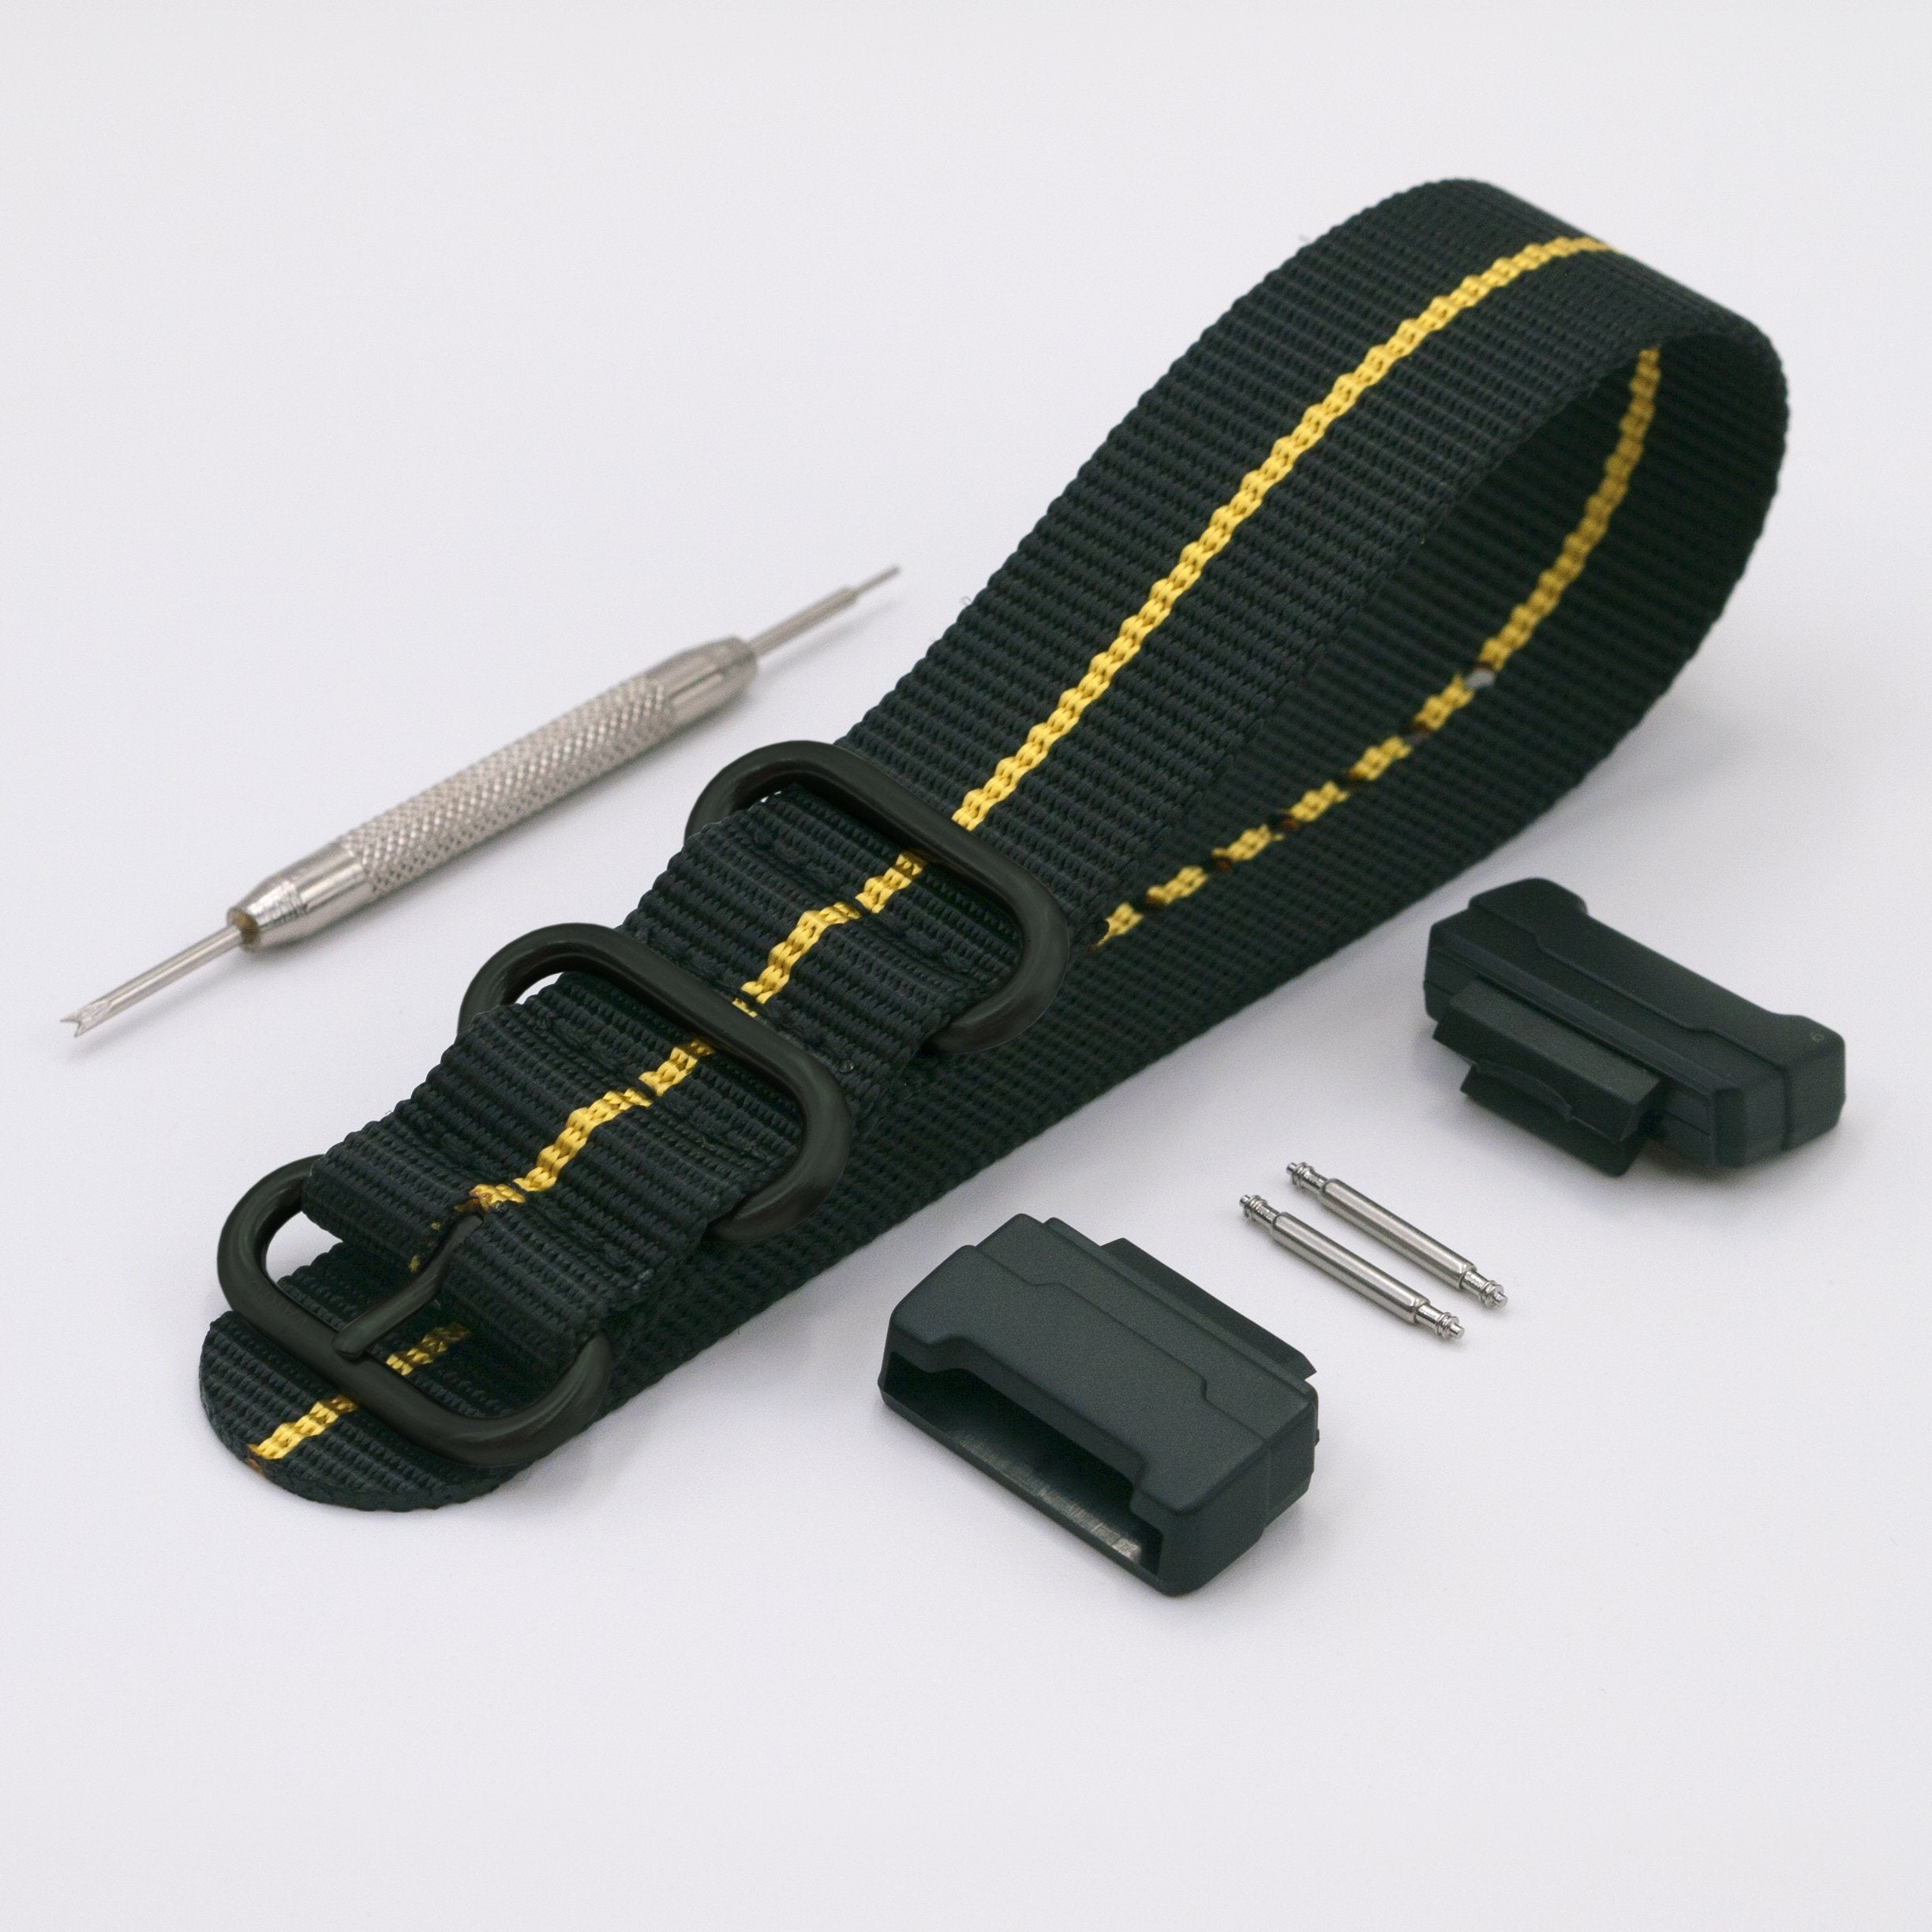 vario ballistic nylon yellow black stripe maratac strap with casio g shock adapter